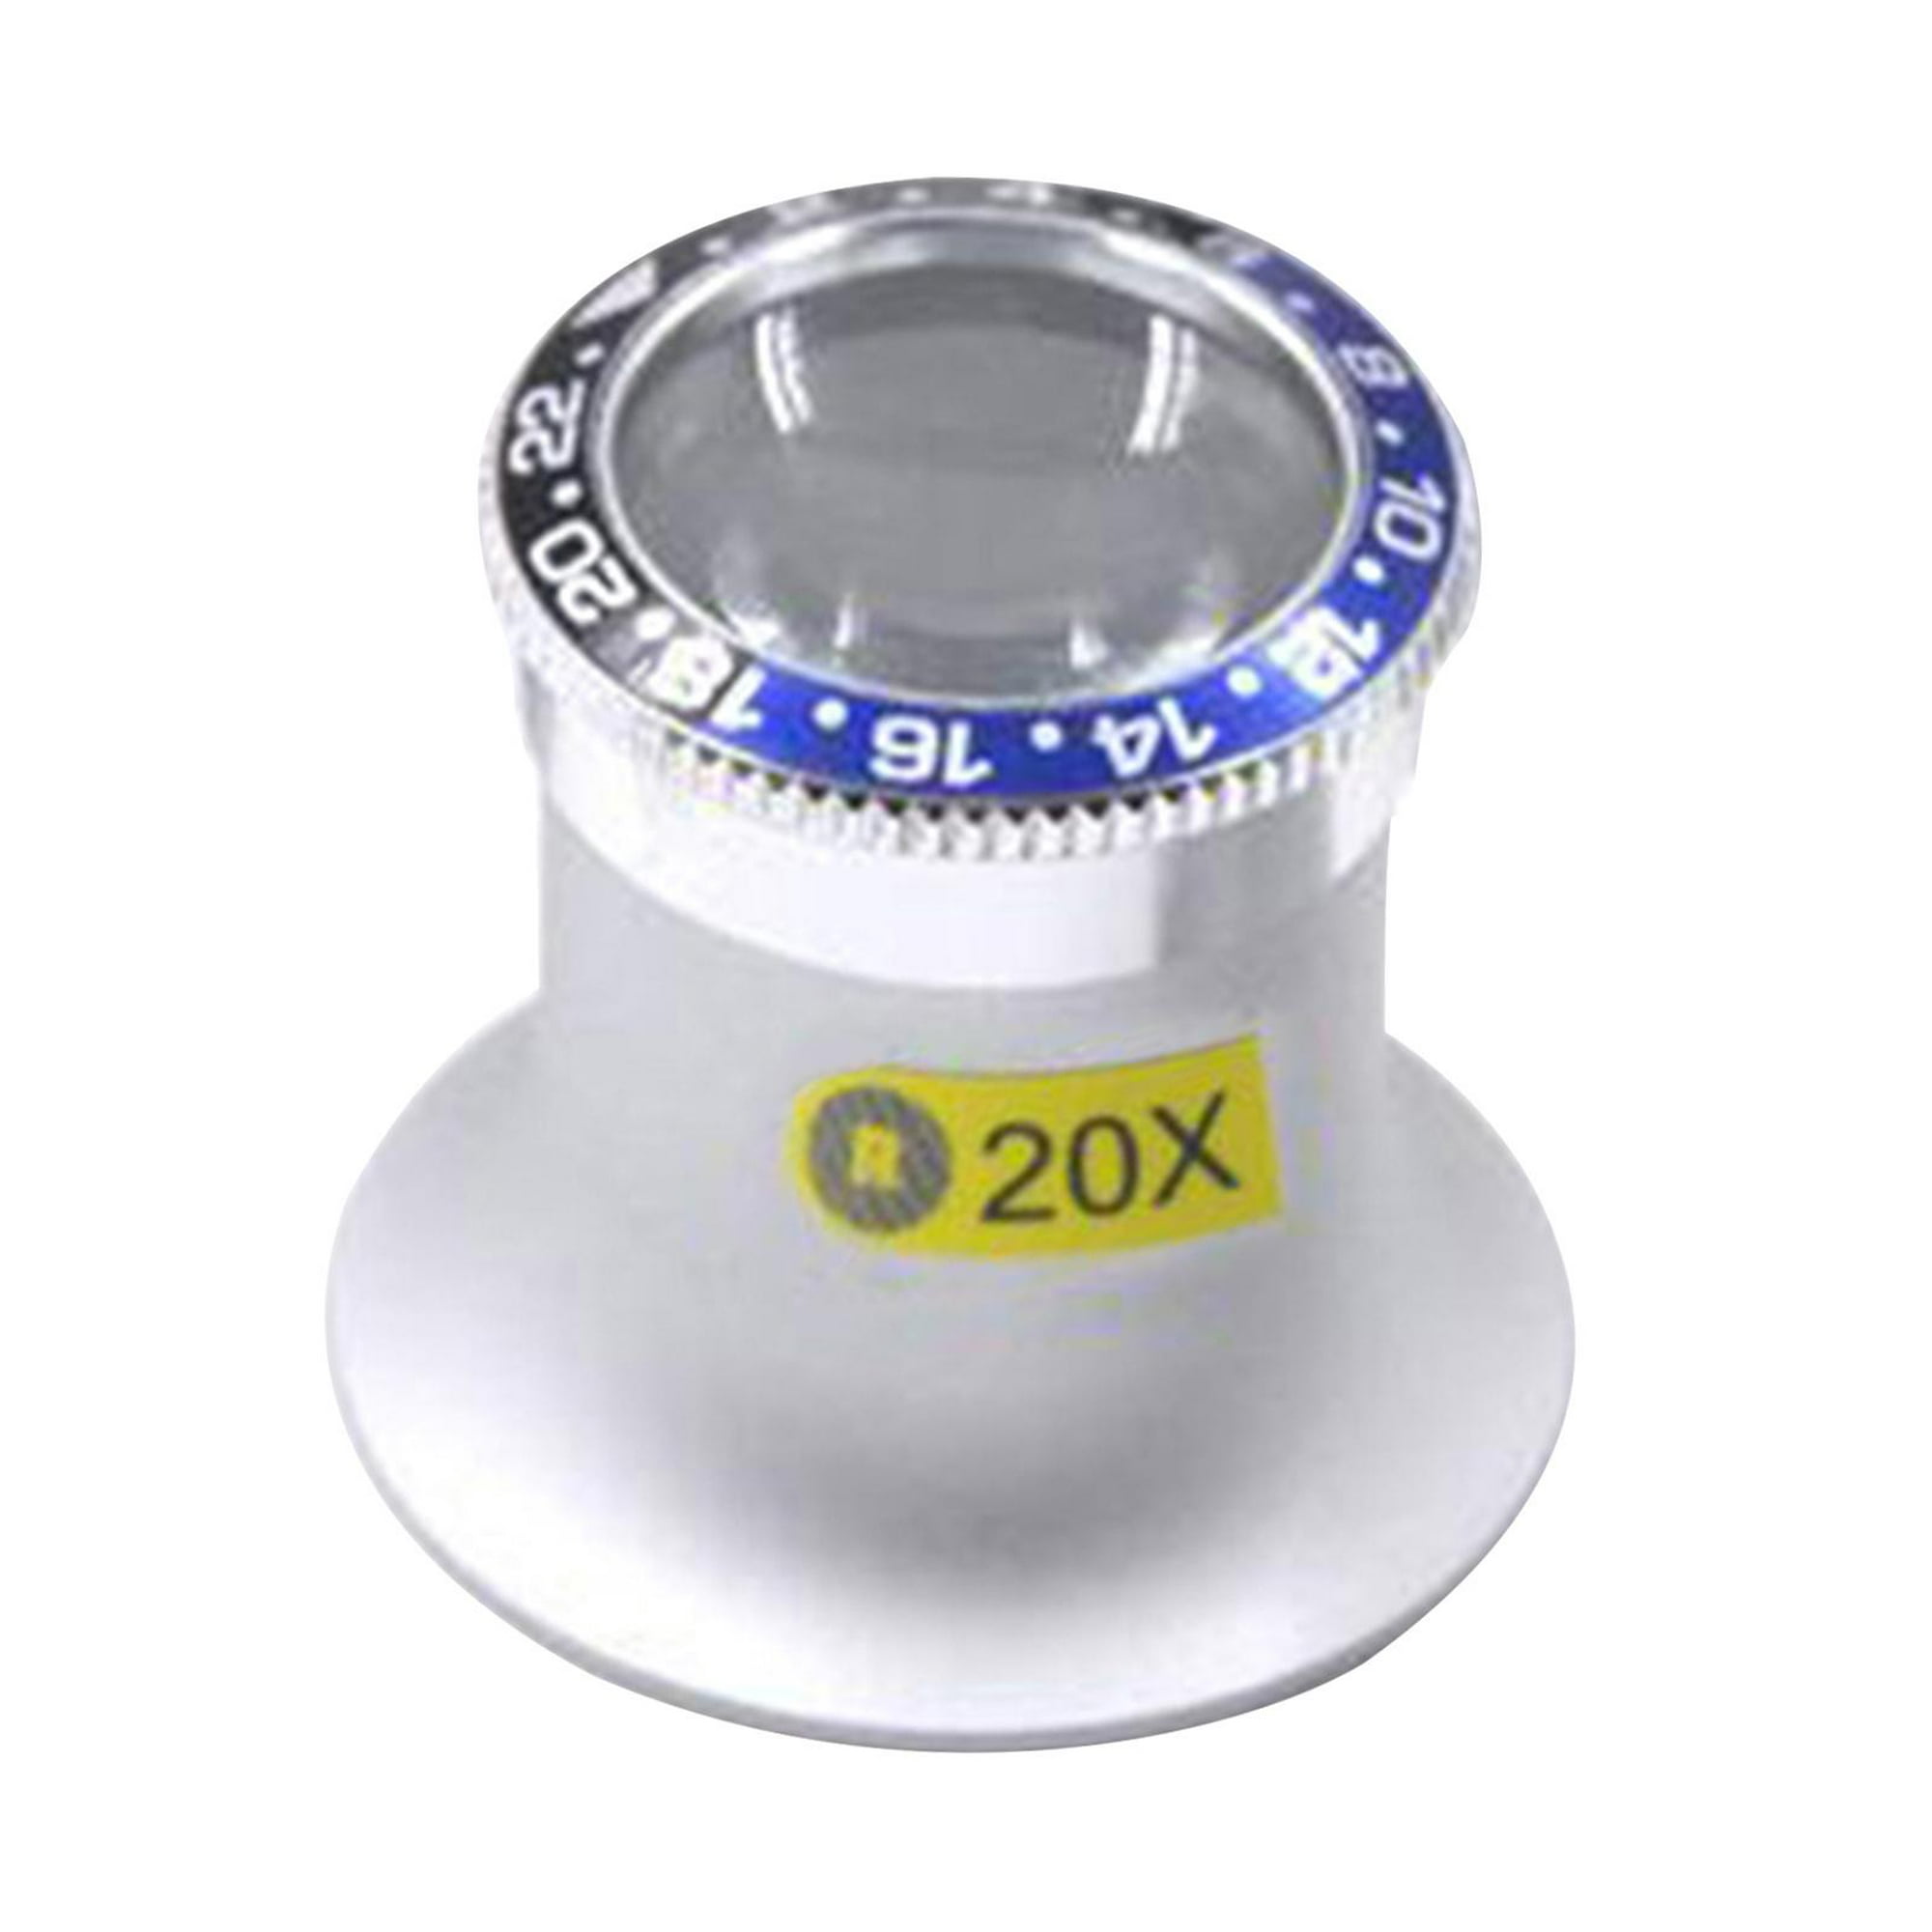 Lupa Relojero-Joyero Lens 3x - Lensforvision - Comprar lupa lente